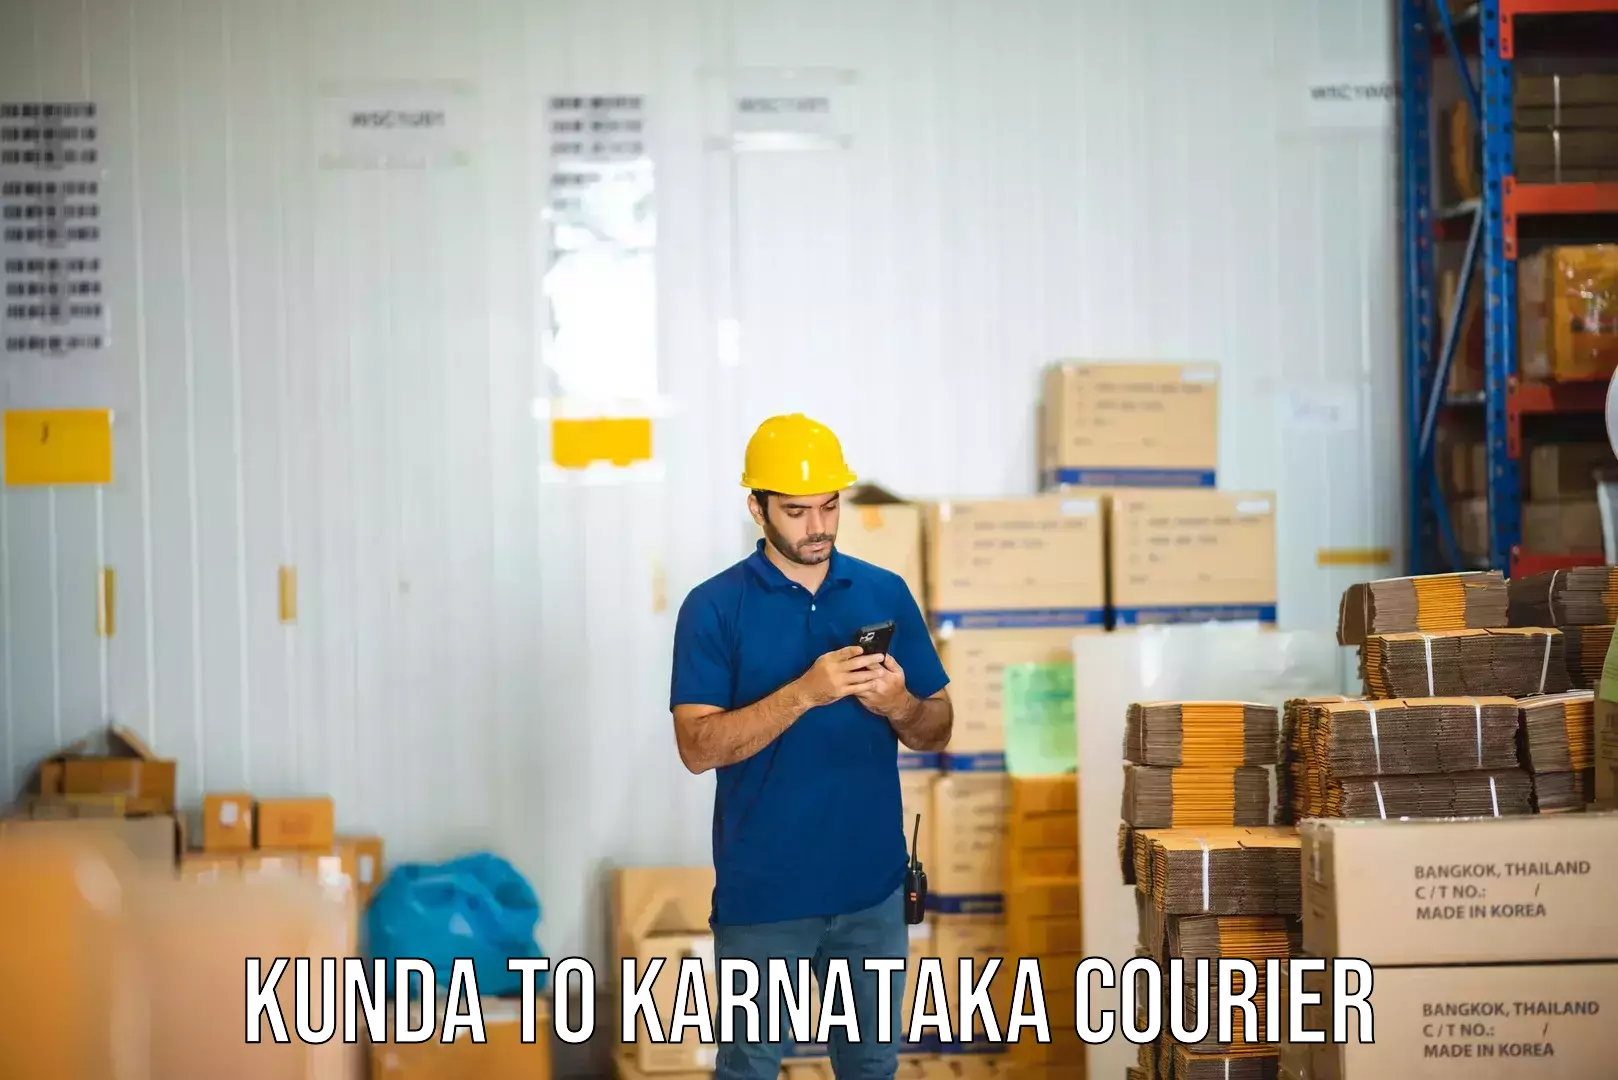 State-of-the-art courier technology Kunda to Karnataka